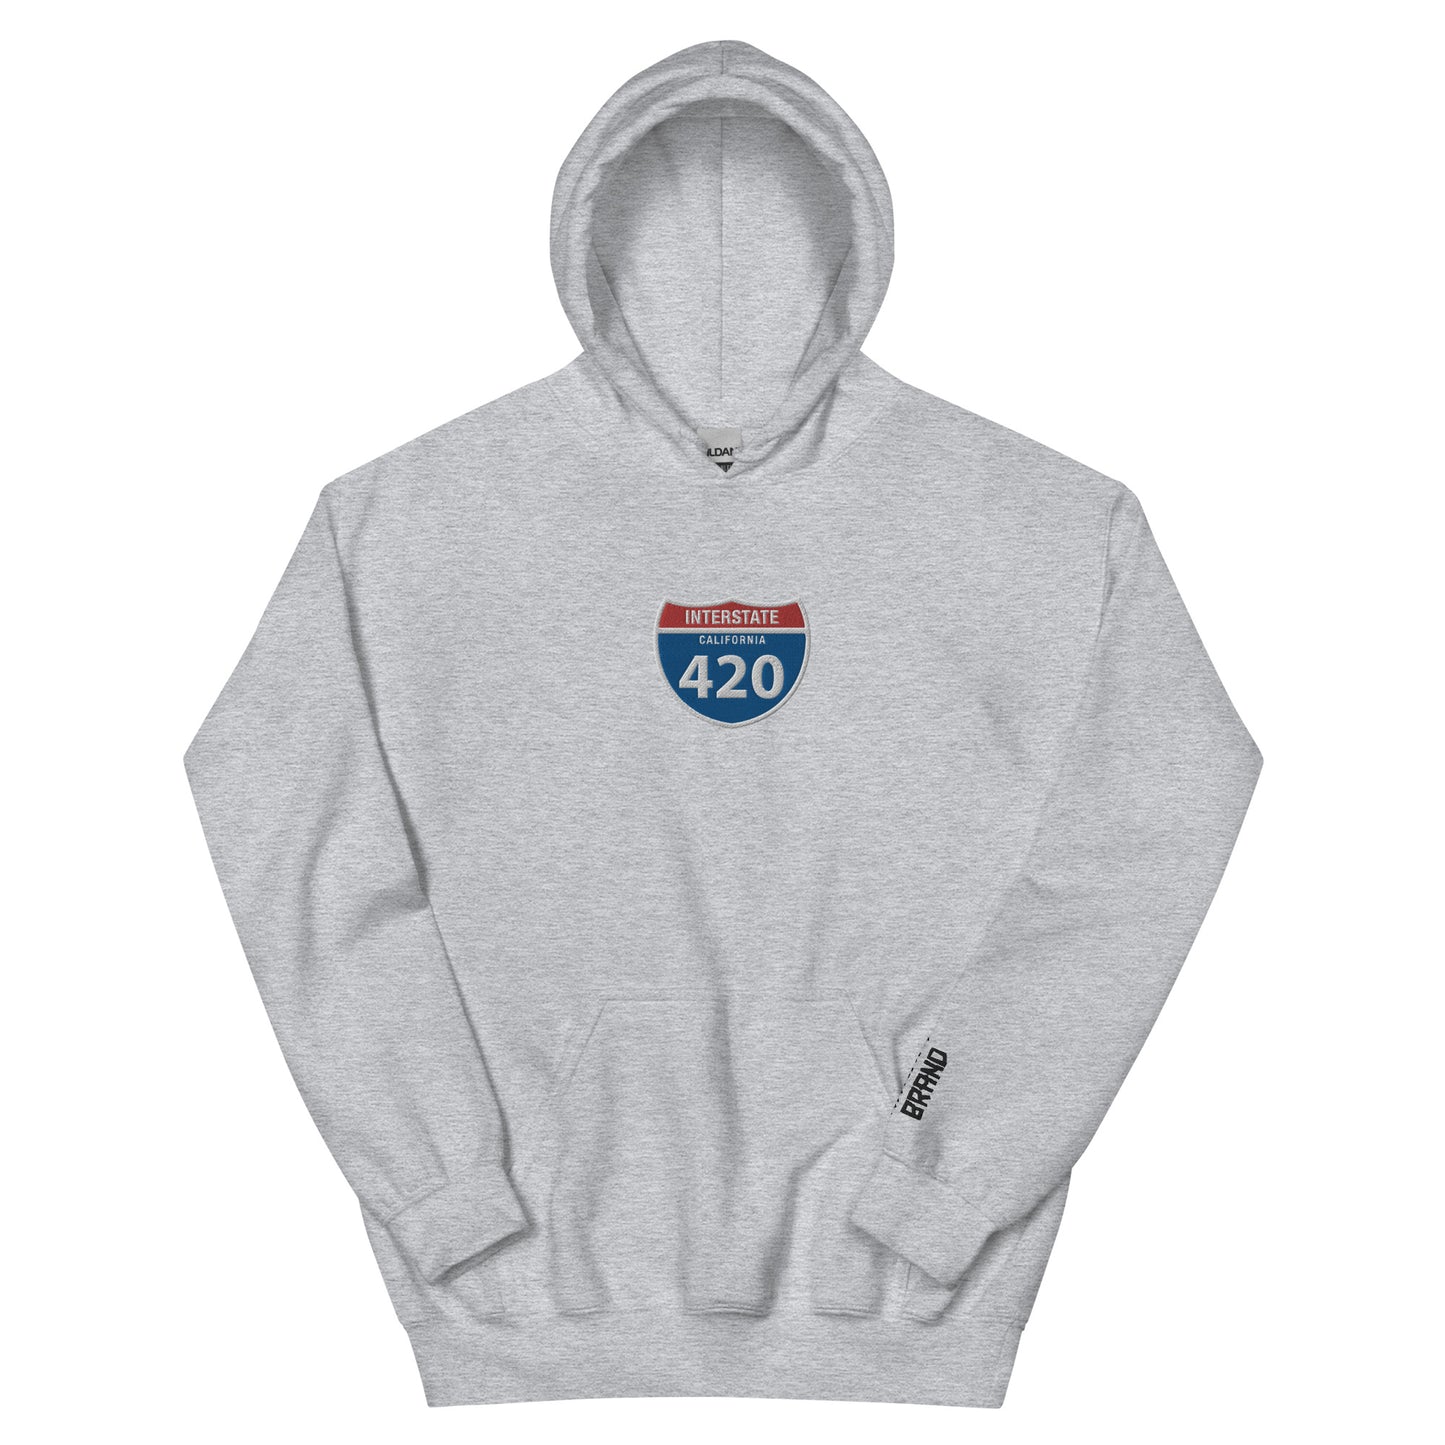 Kranik Brand Hoodie / 420 Collection / Embroidered / Interstate 420